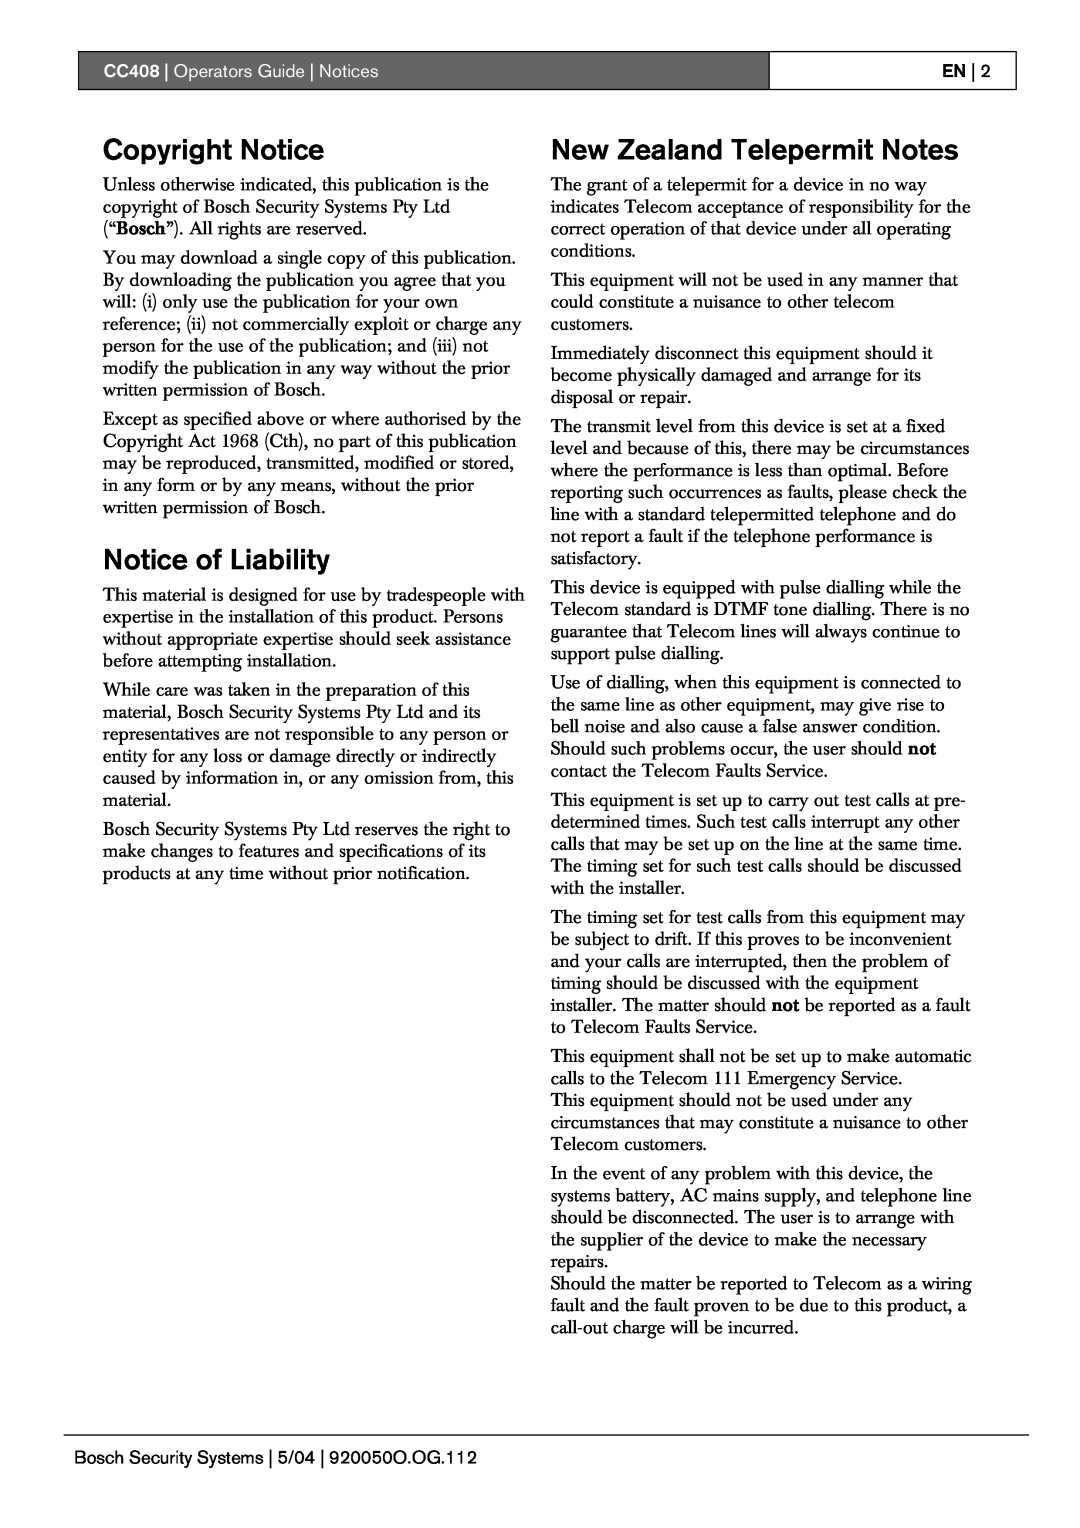 Bosch Appliances Copyright Notice, Notice of Liability, New Zealand Telepermit Notes, CC408 Operators Guide Notices, En 